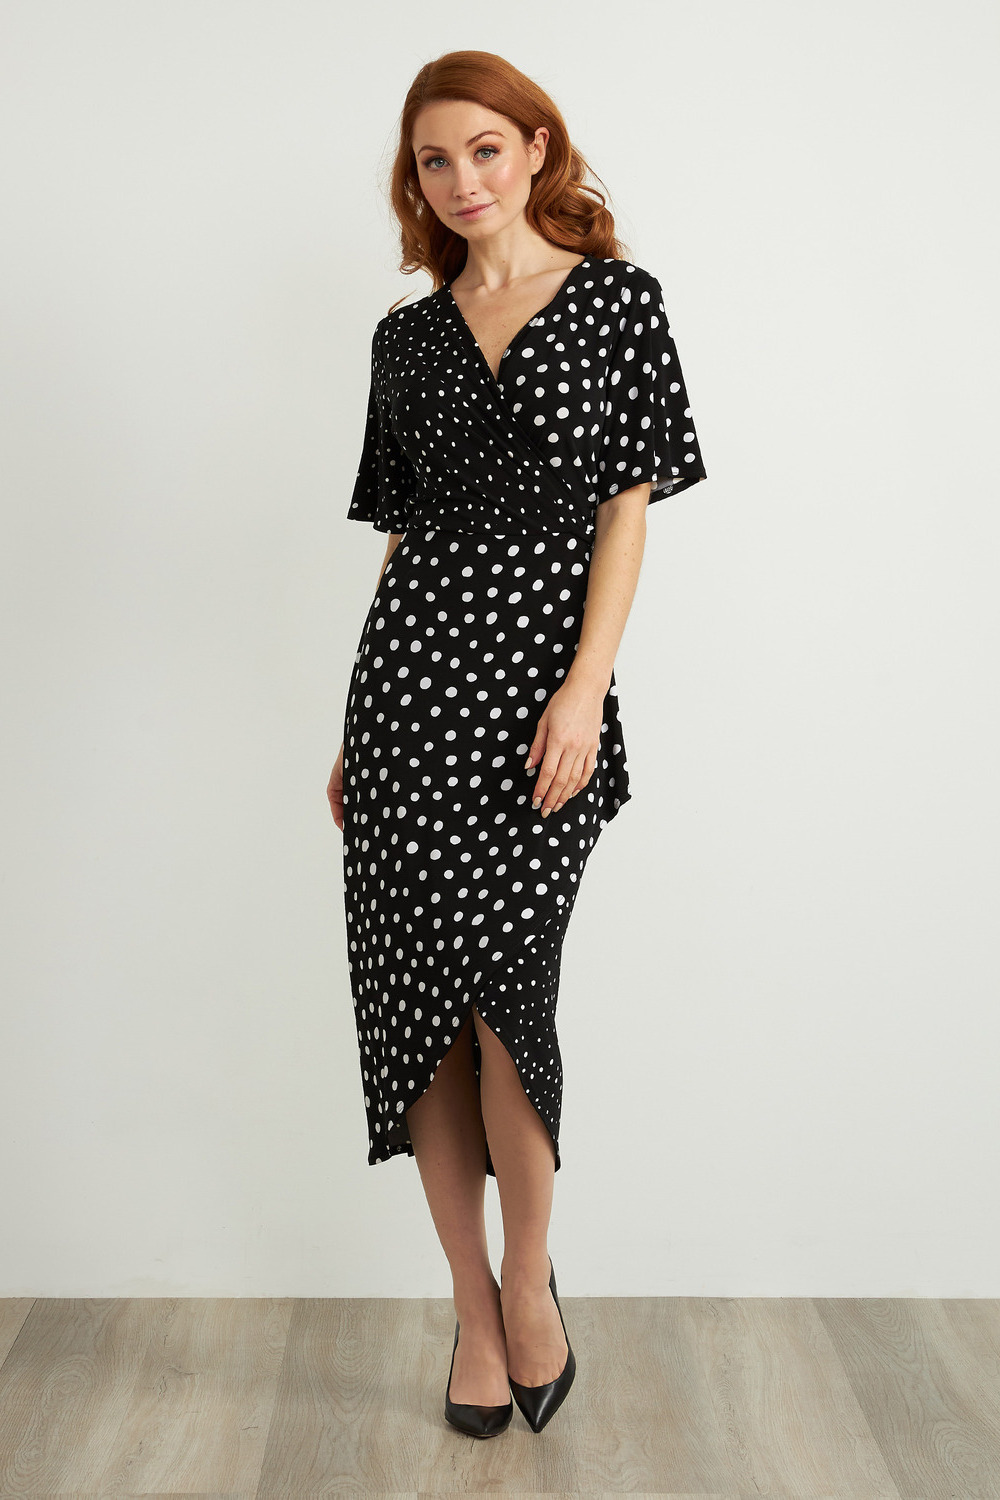 Joseph Ribkoff Polka Dot Short Sleeve Dress Style 211235. Black/white